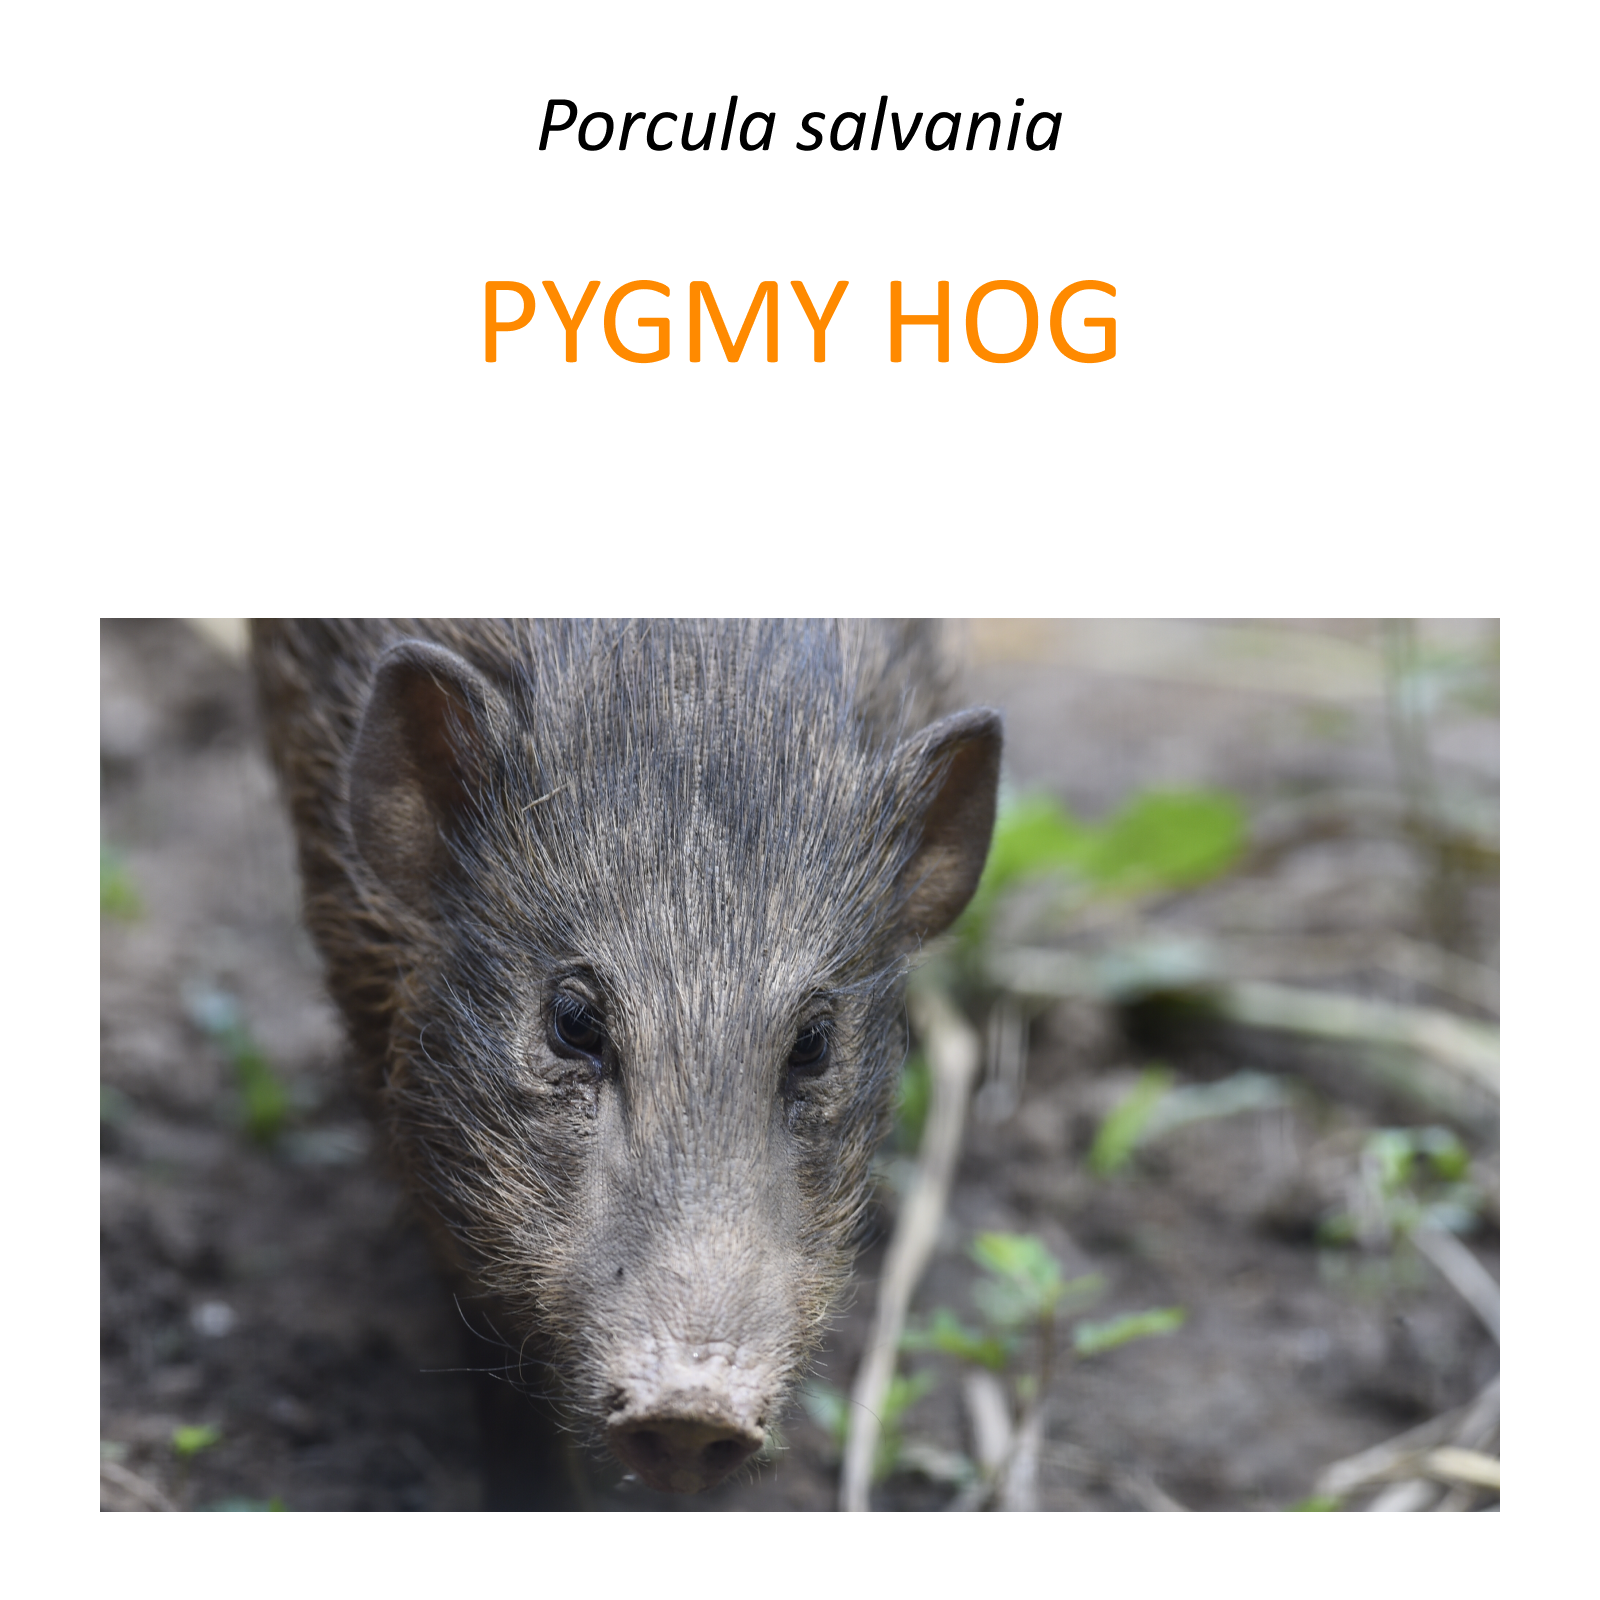 Pygmy hog conservation program